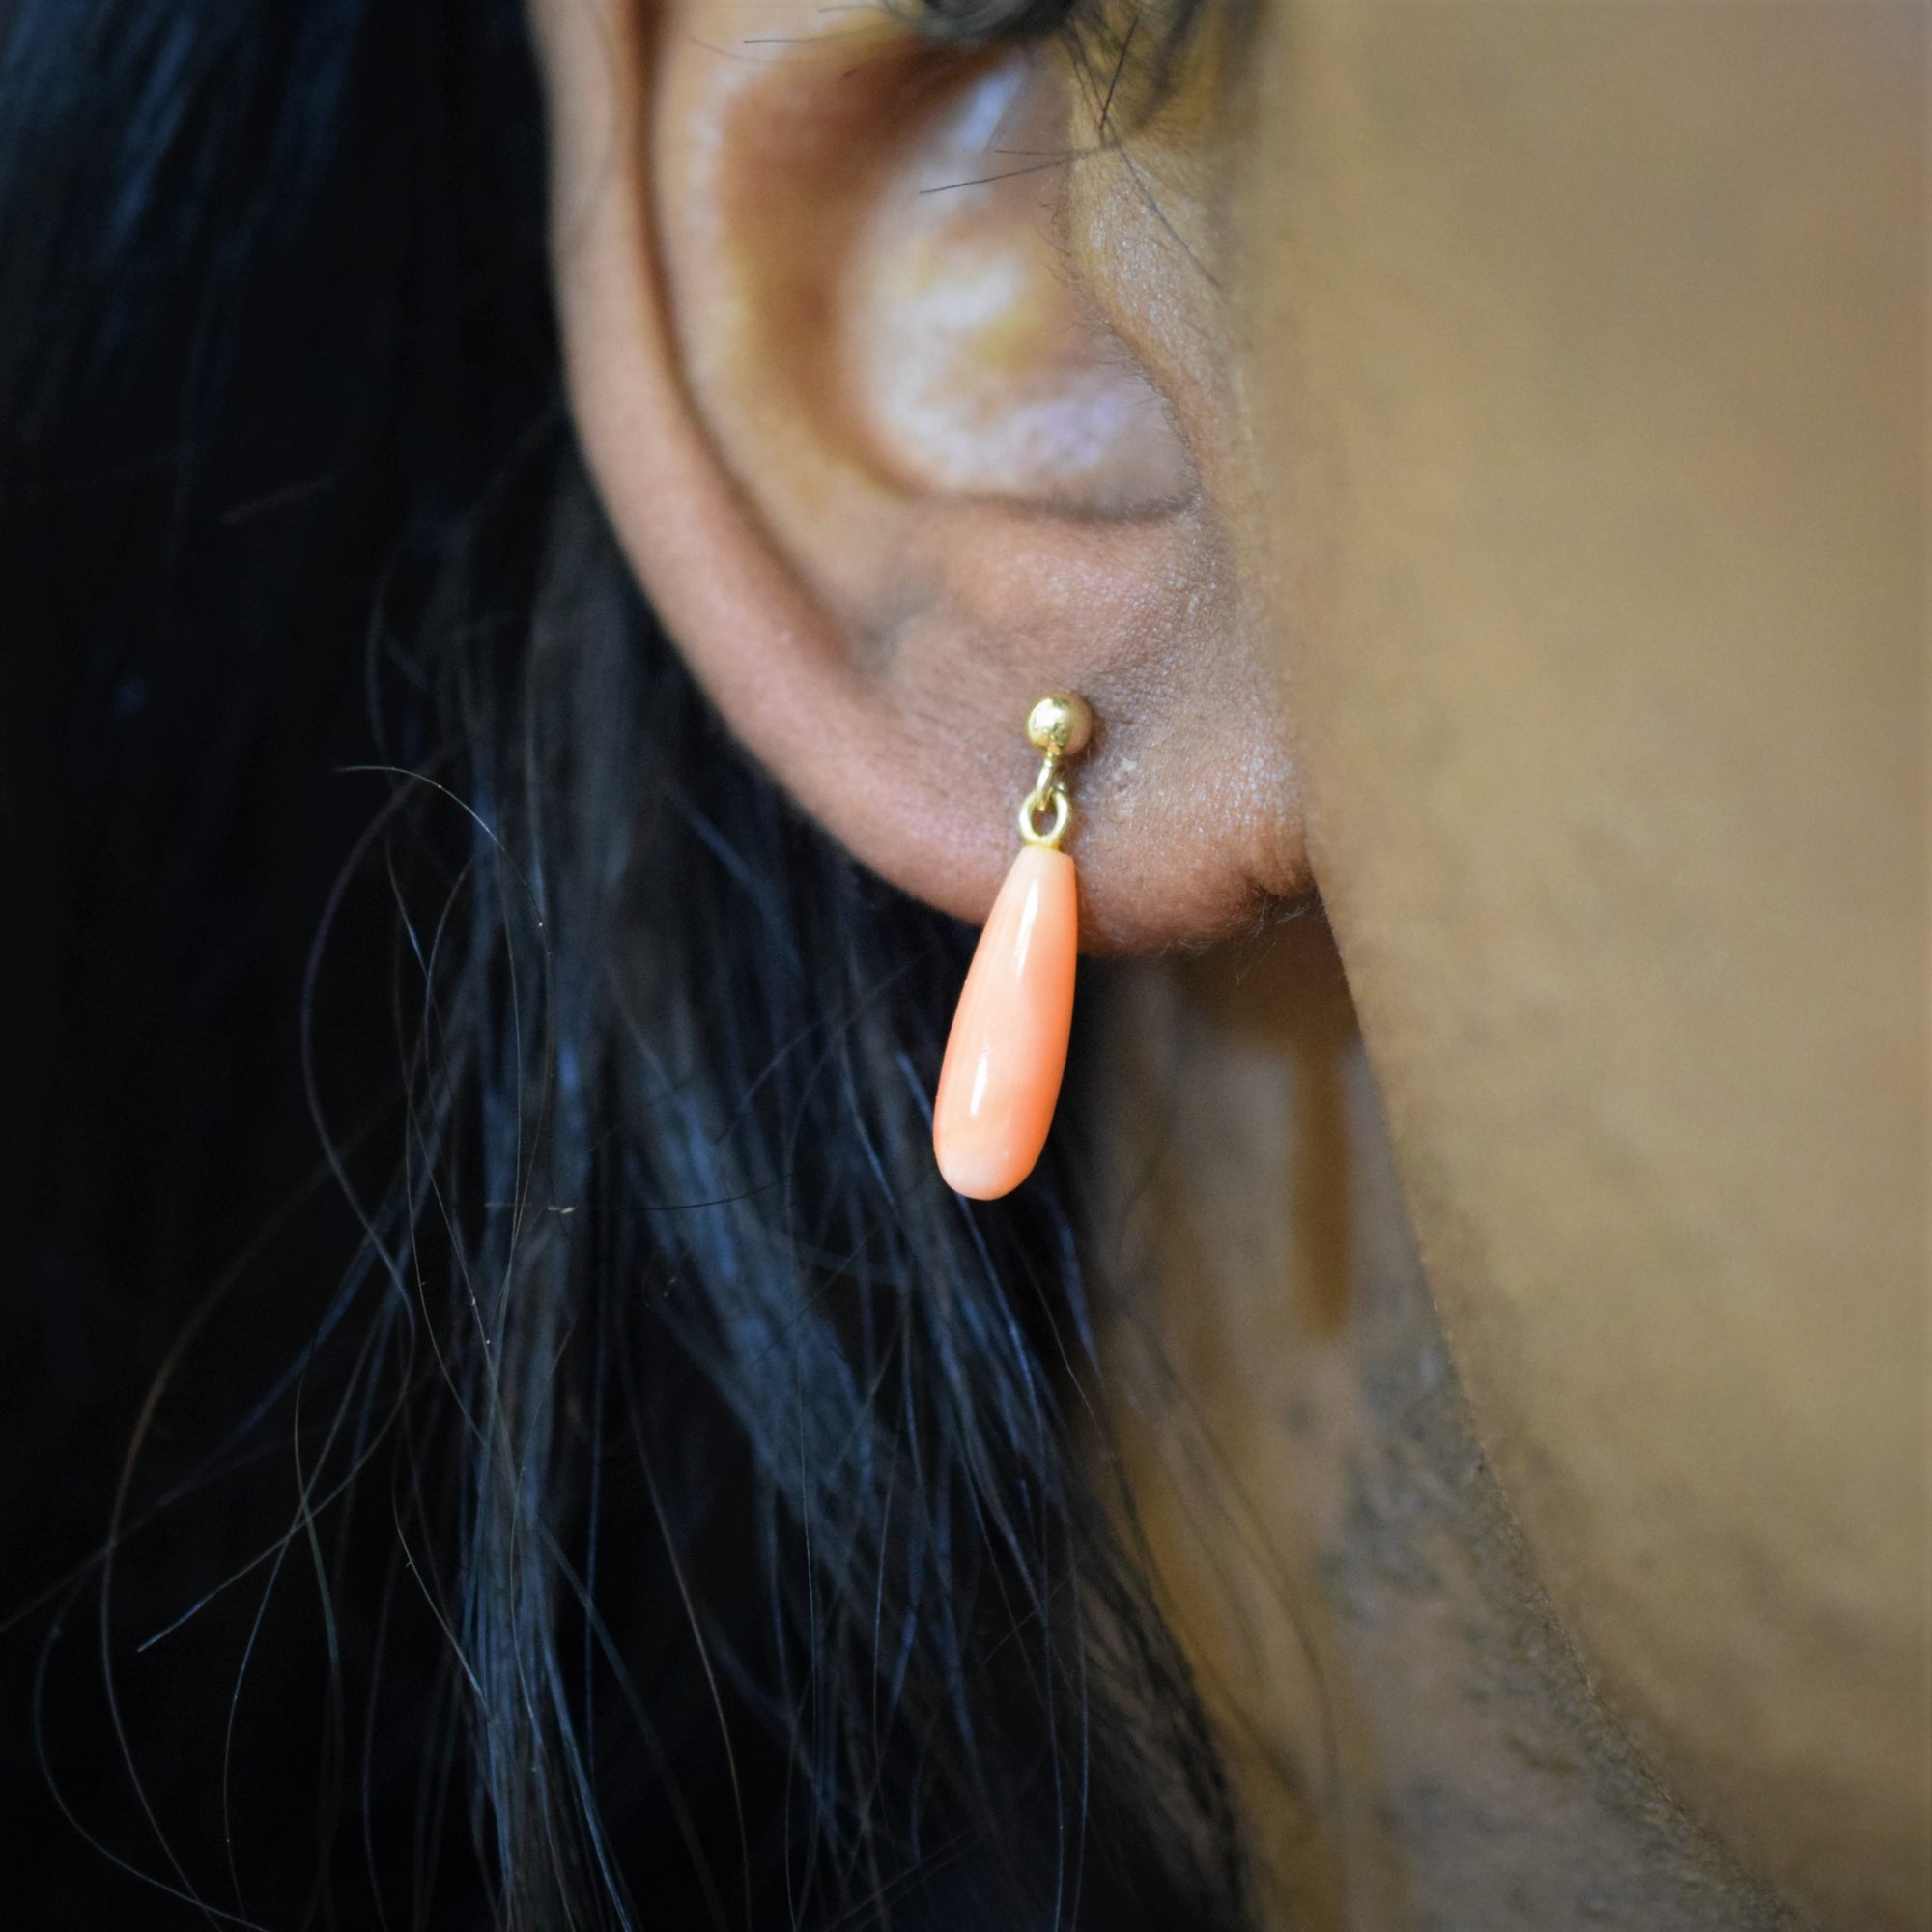 Briolette Coral Drop Stud Earrings | 5.00ctw |